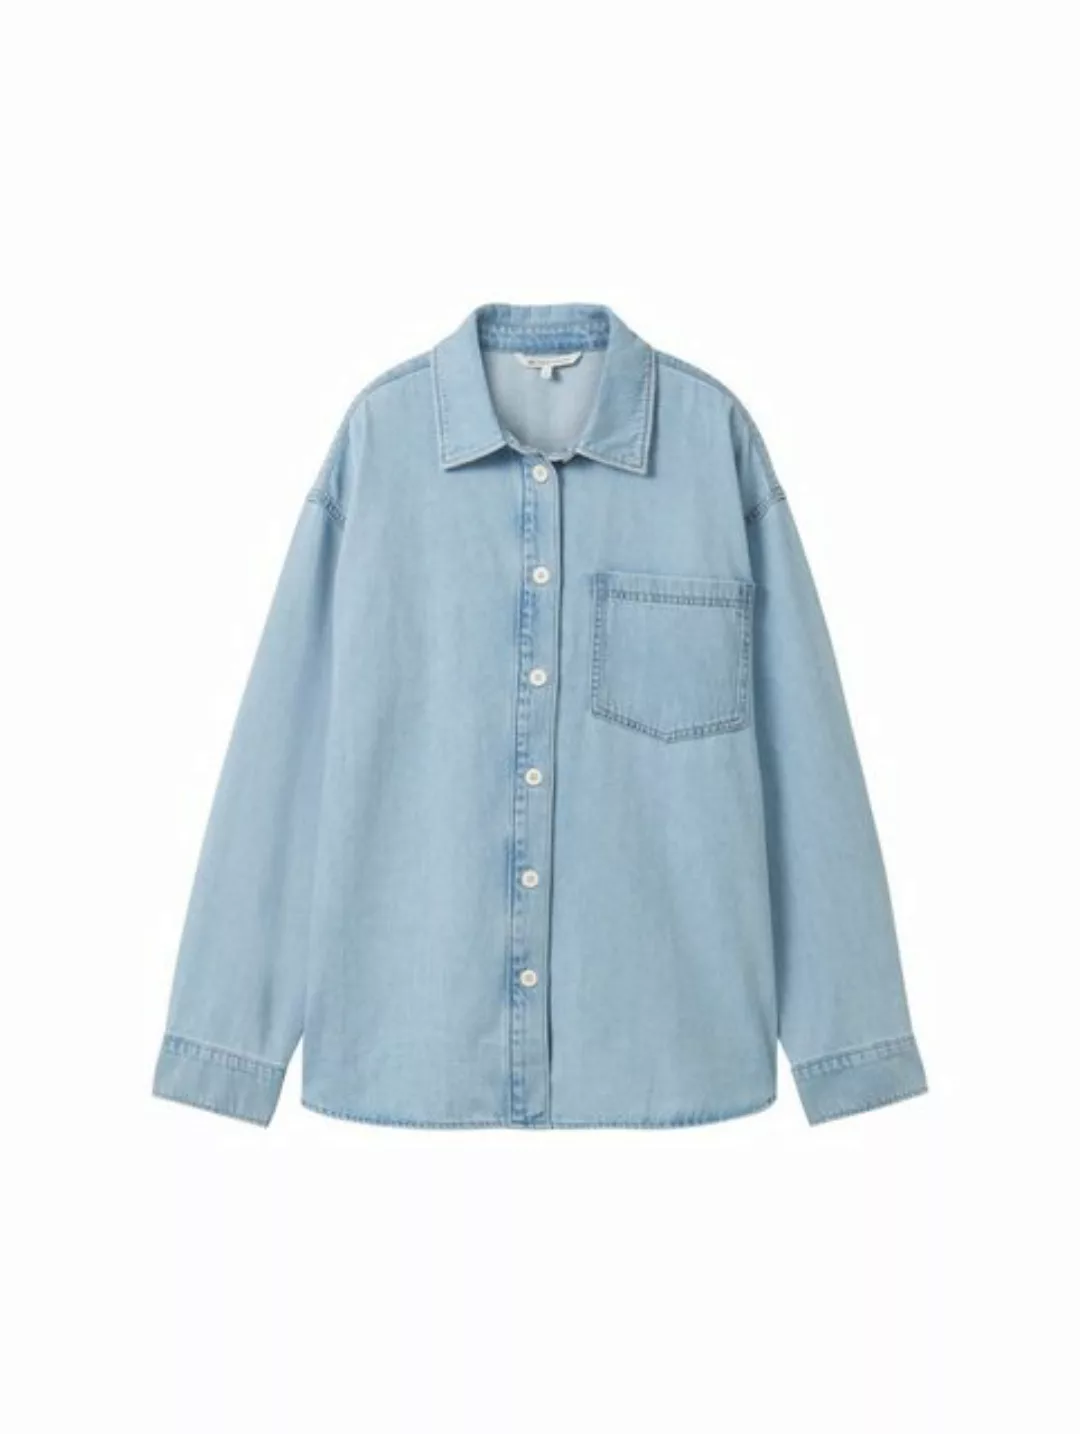 TOM TAILOR Denim Blusenshirt oversized denim shirt, Used Light Stone Blue D günstig online kaufen